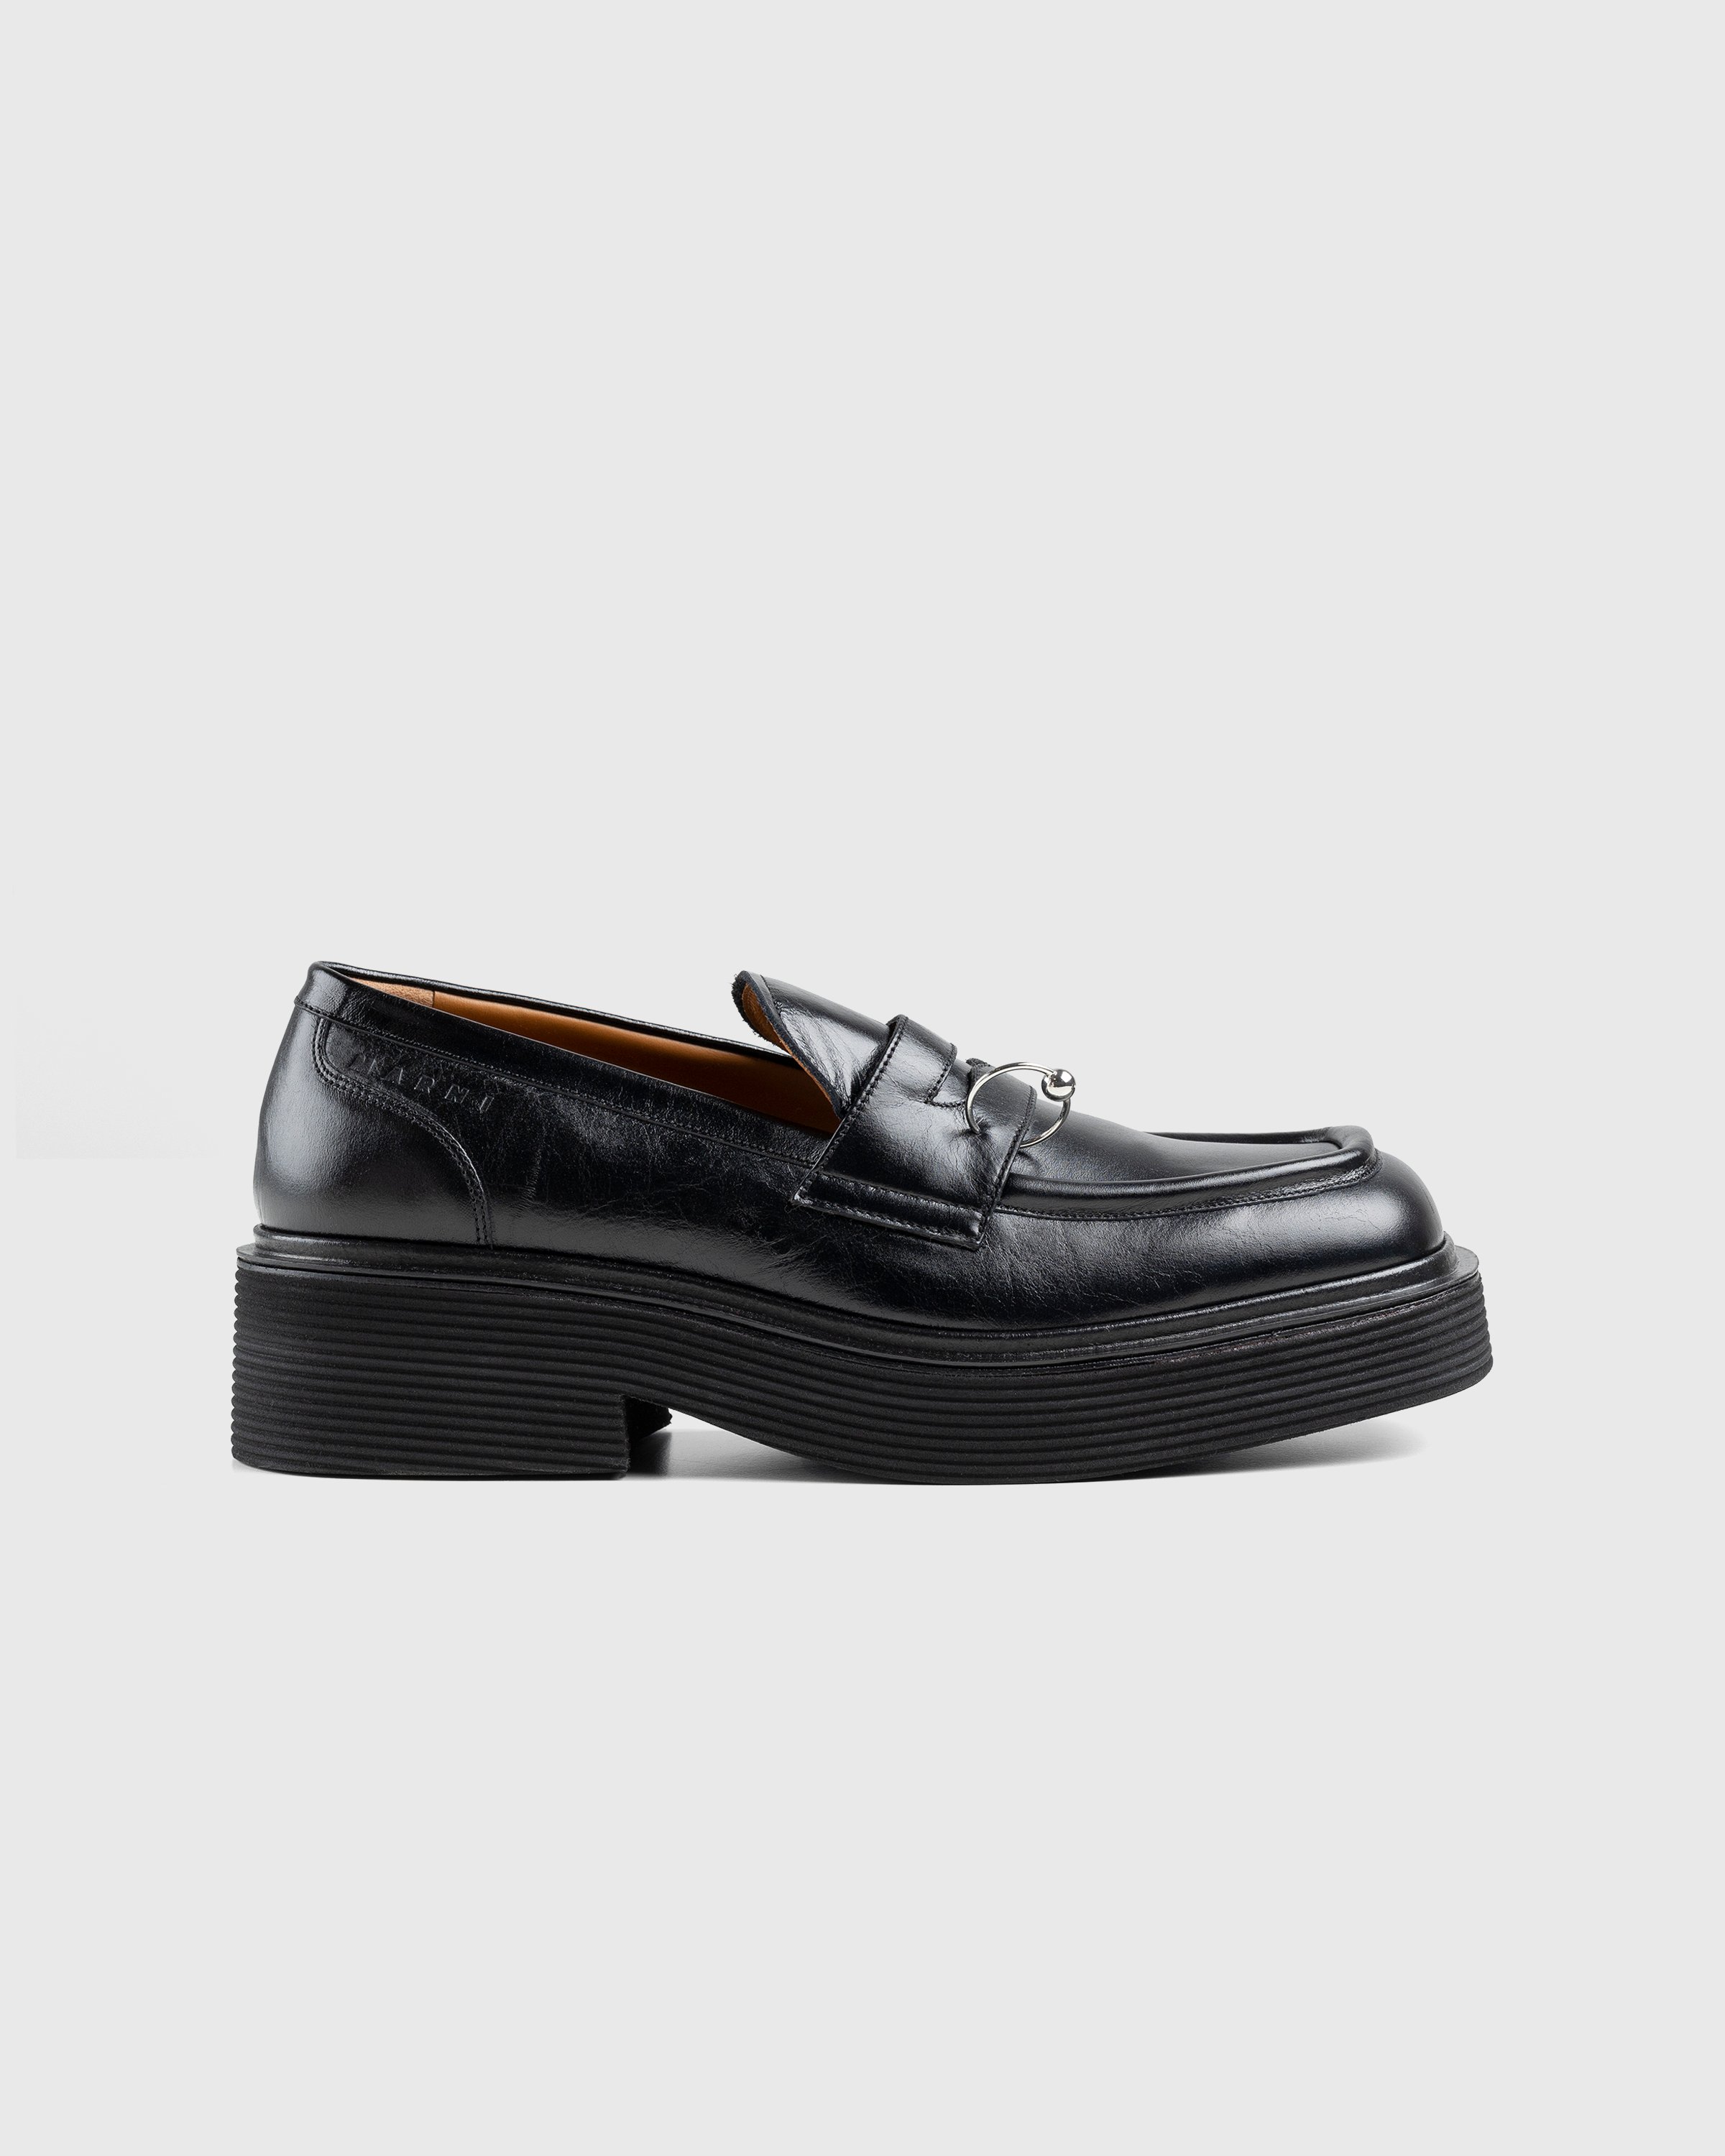 Marni – Shiny Leather Moccasin Black | Highsnobiety Shop